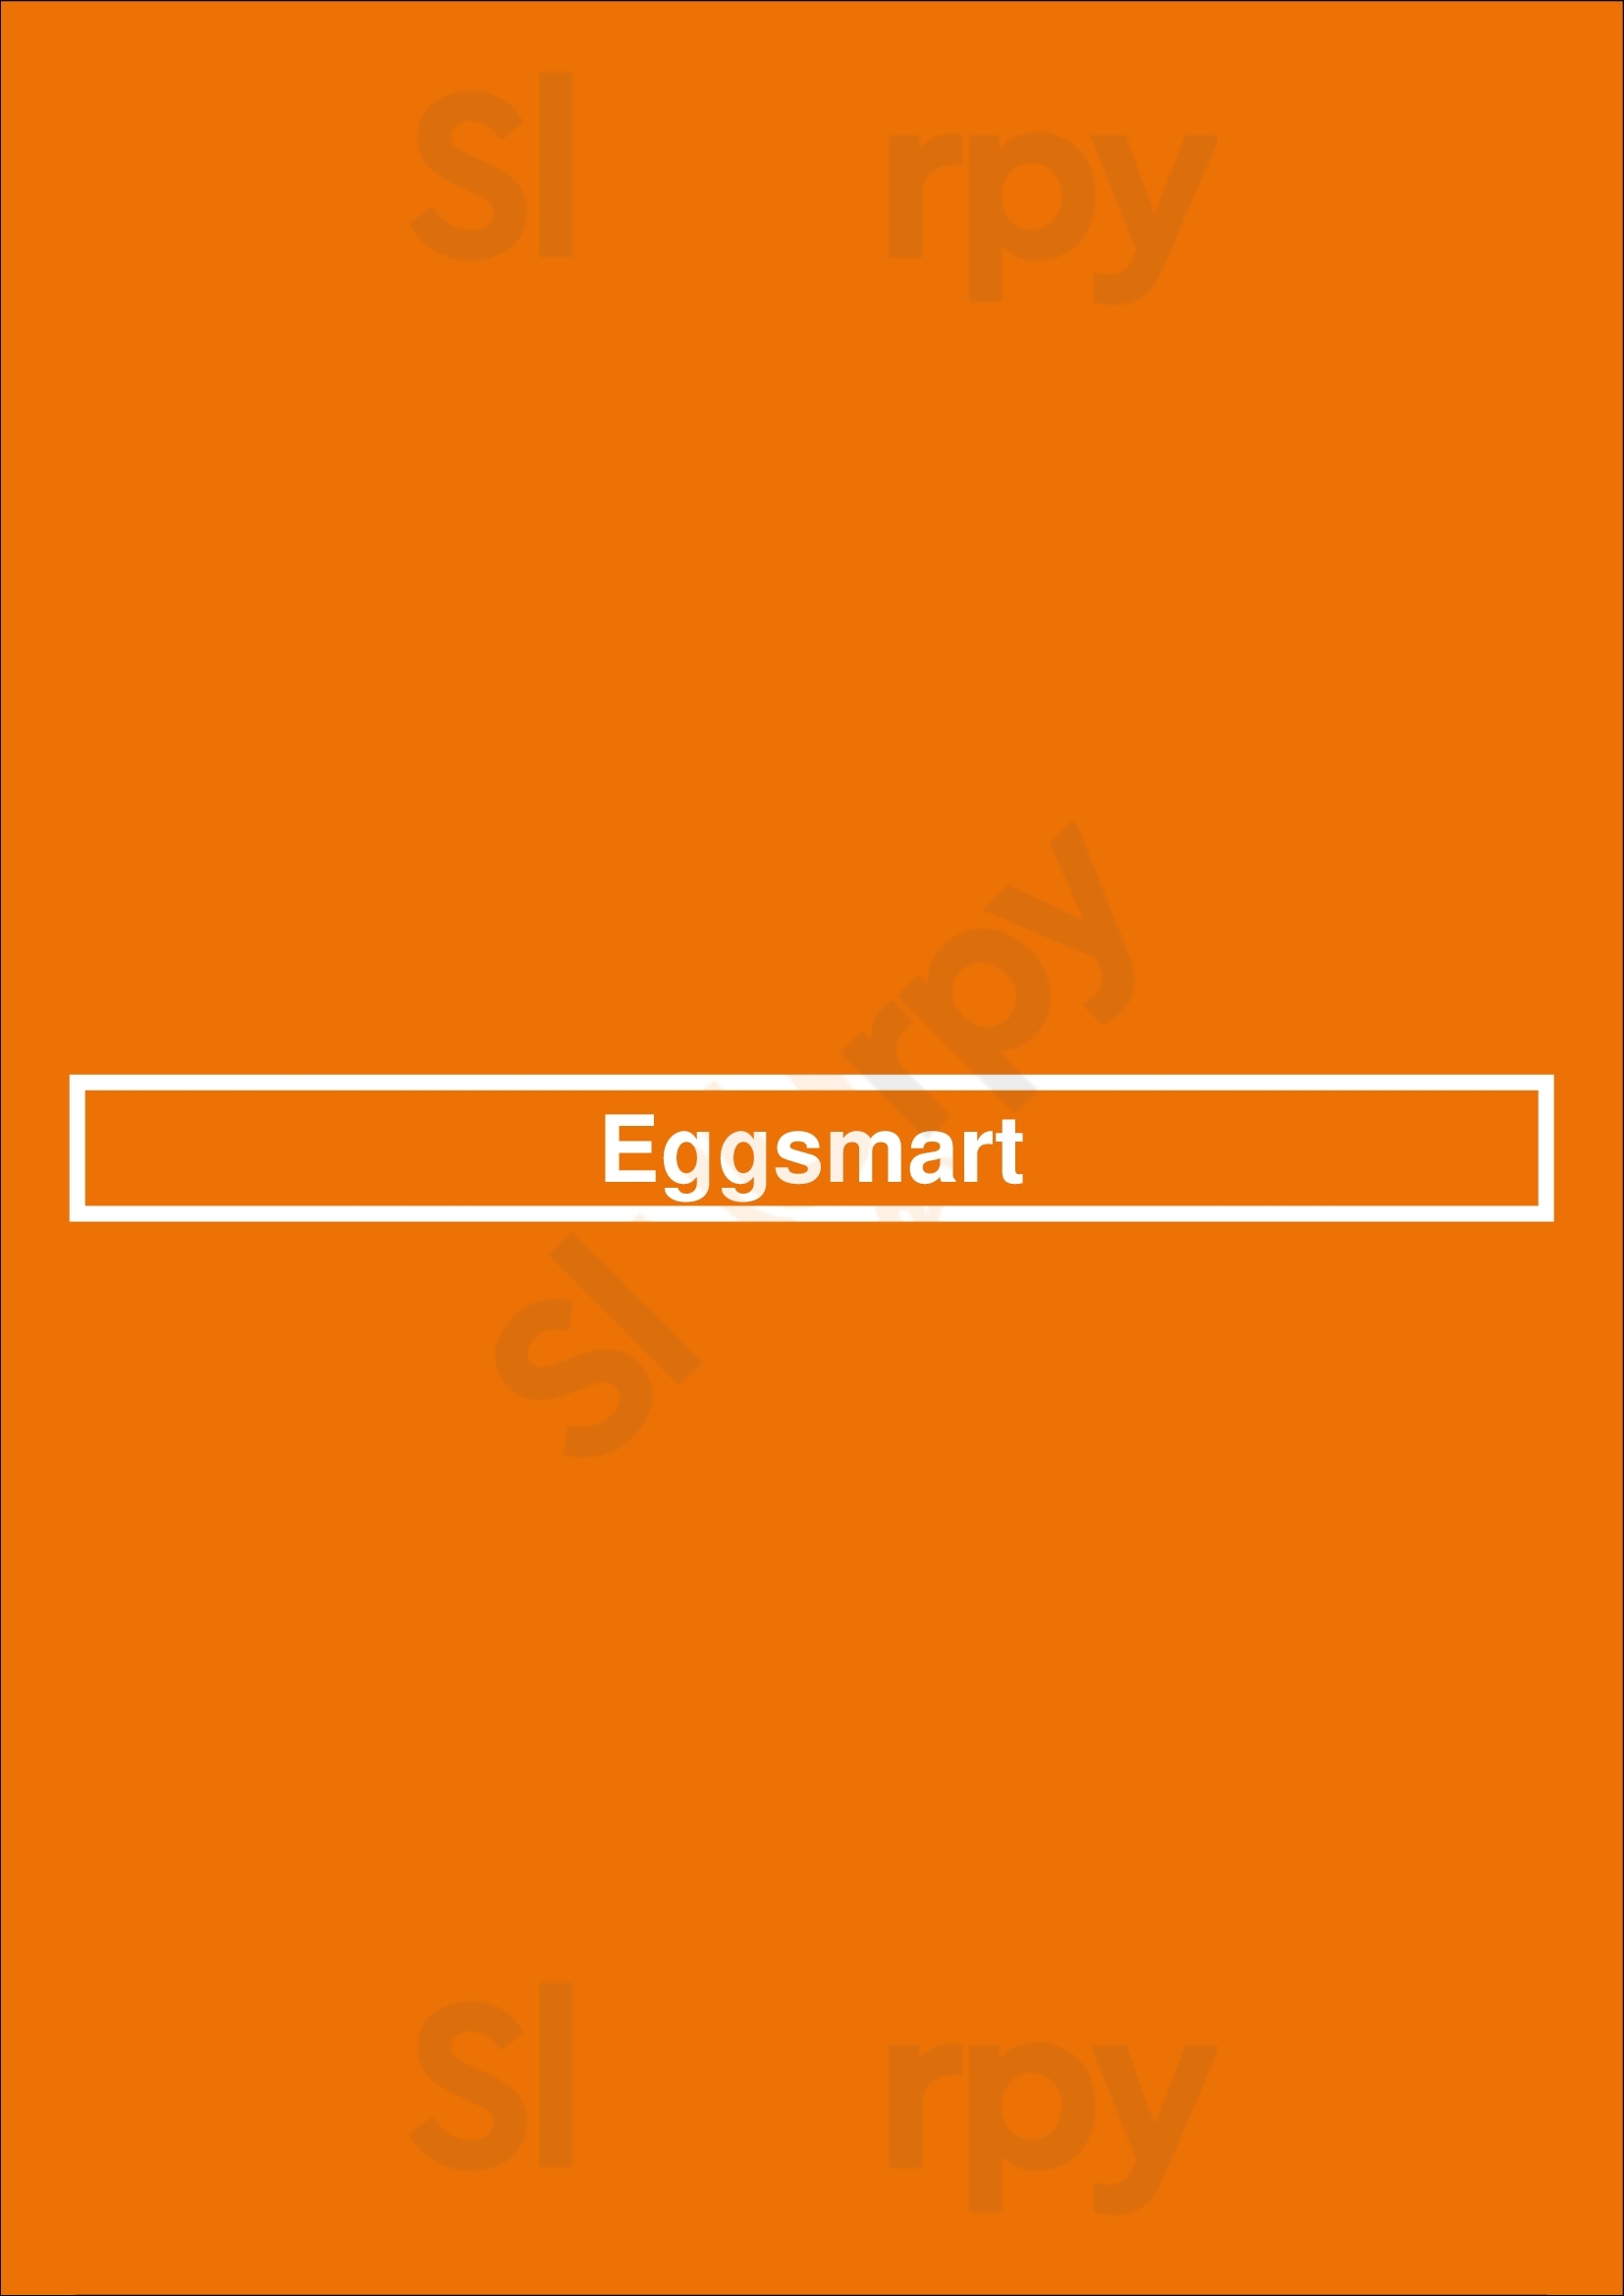 Eggsmart Toronto Menu - 1